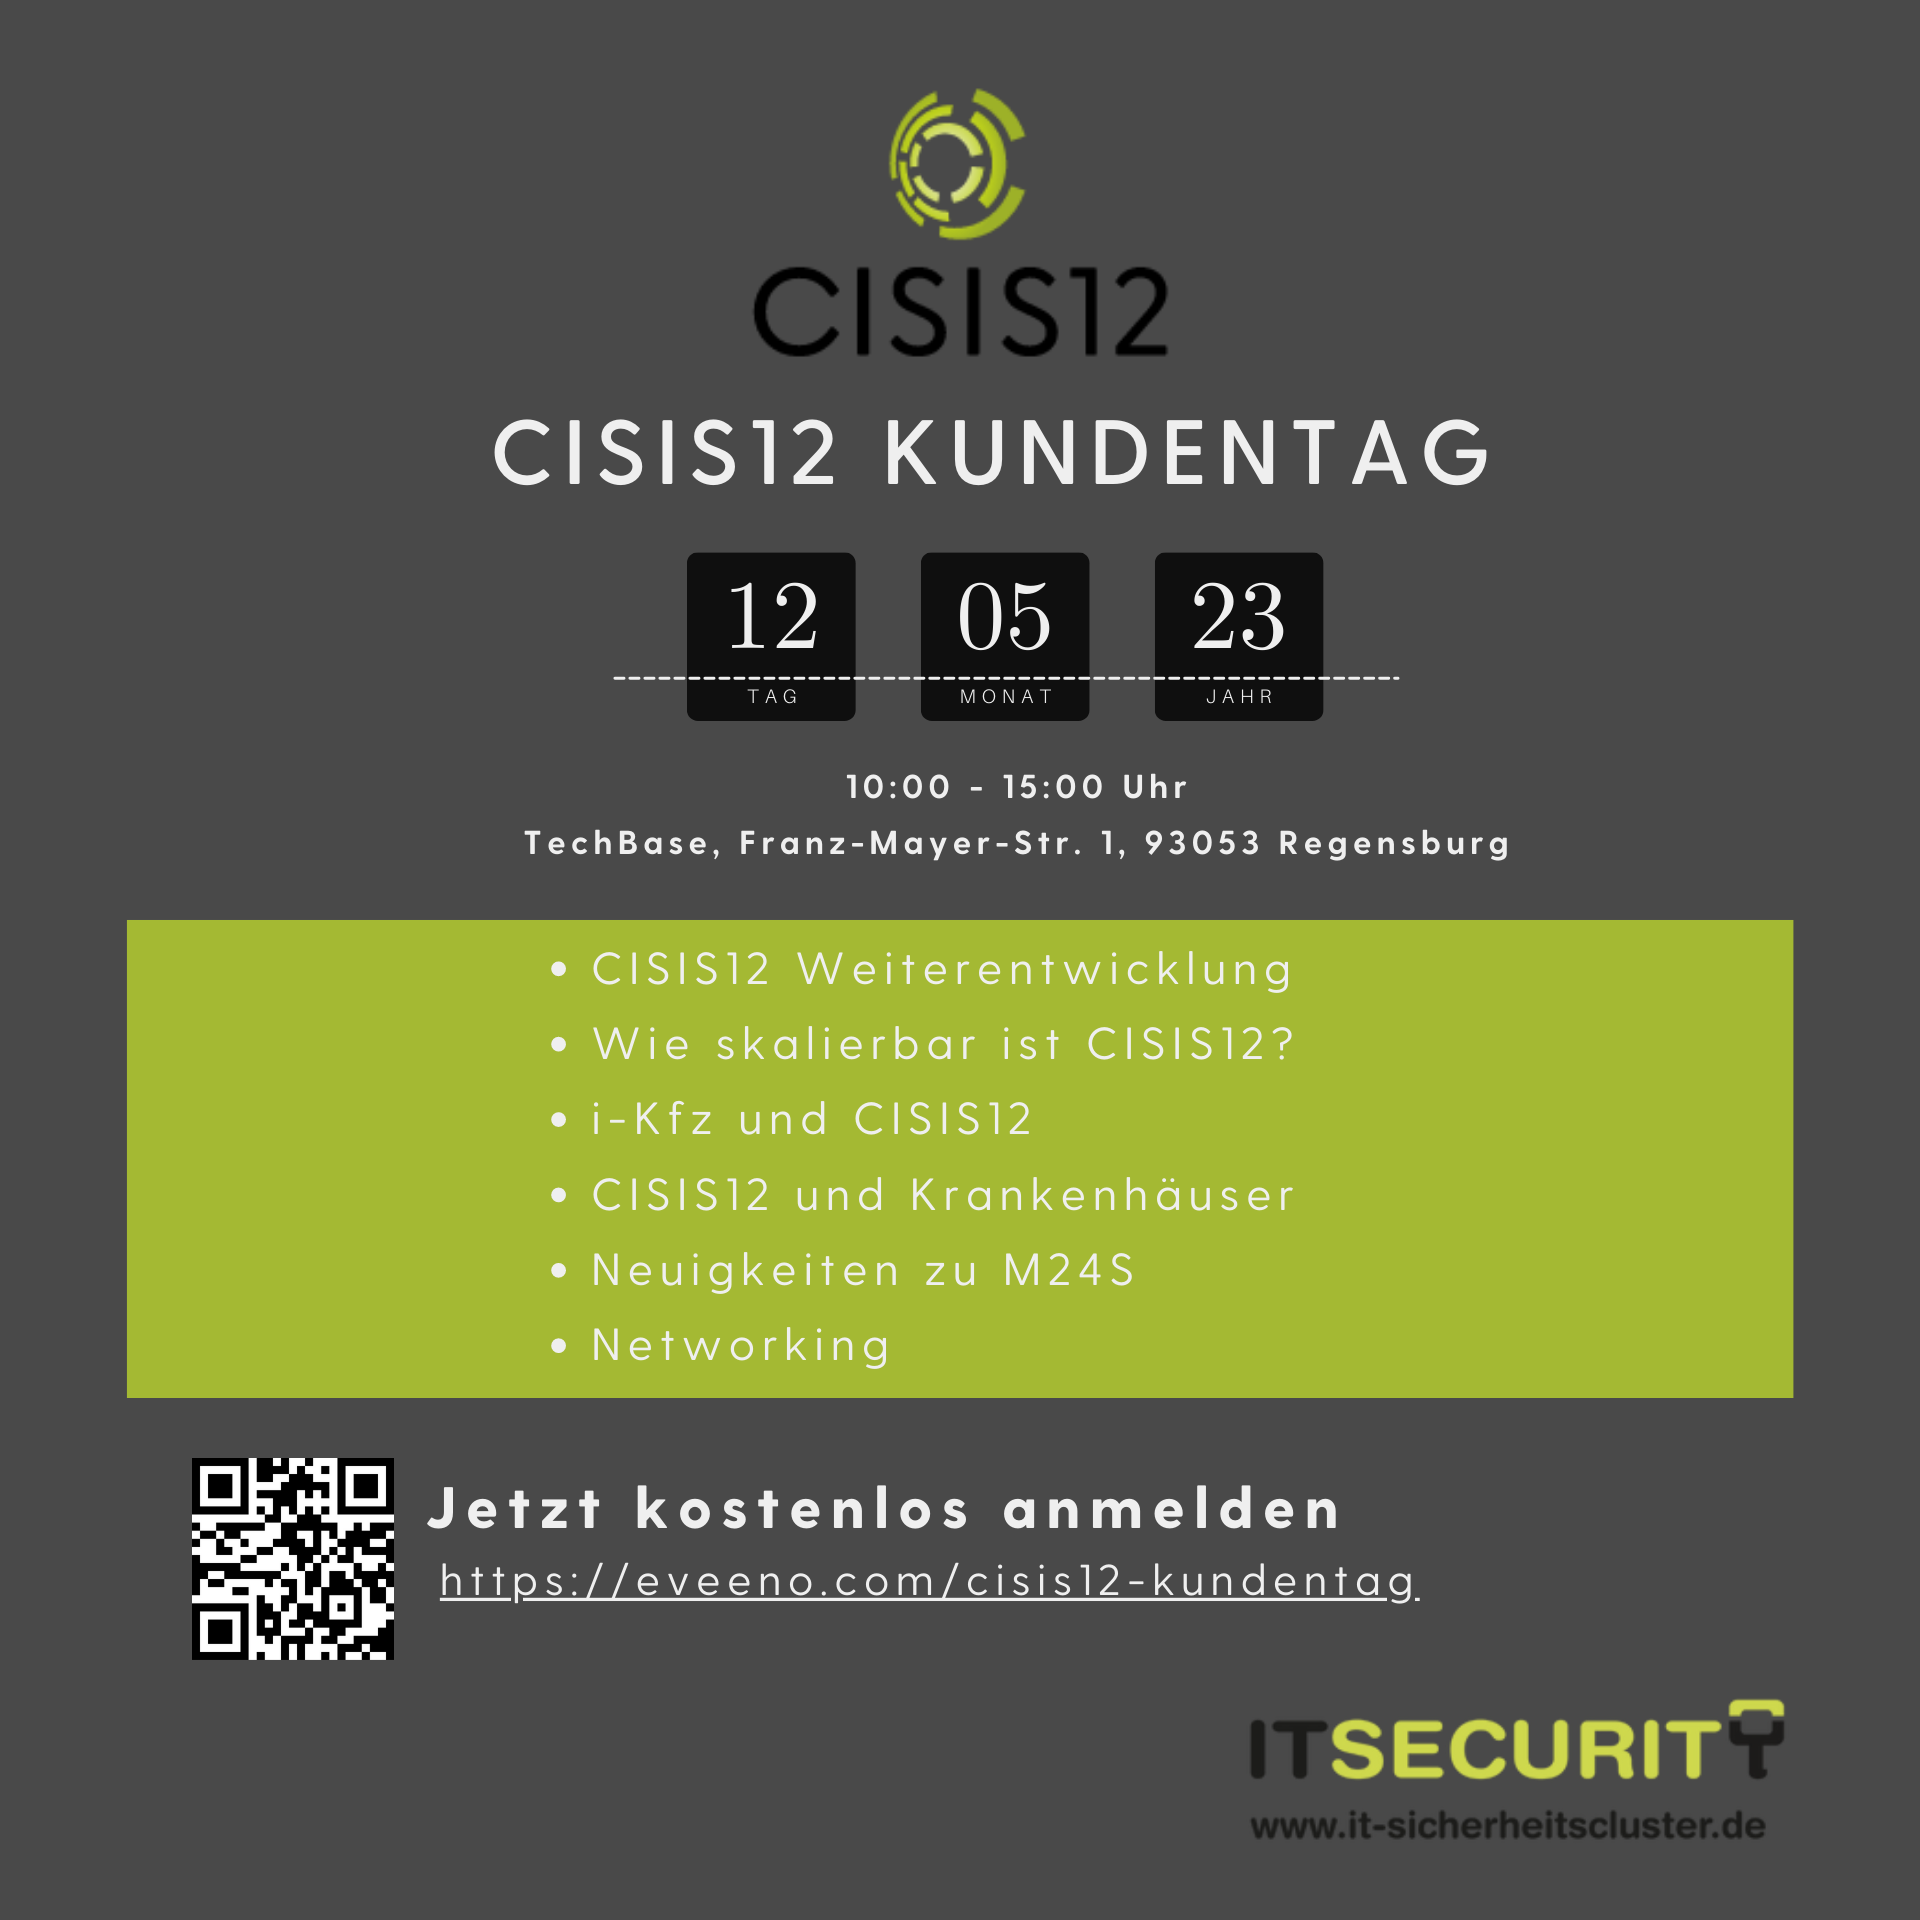 IT-Sicherheitscluster e.V.: CISIS12 Kundentag